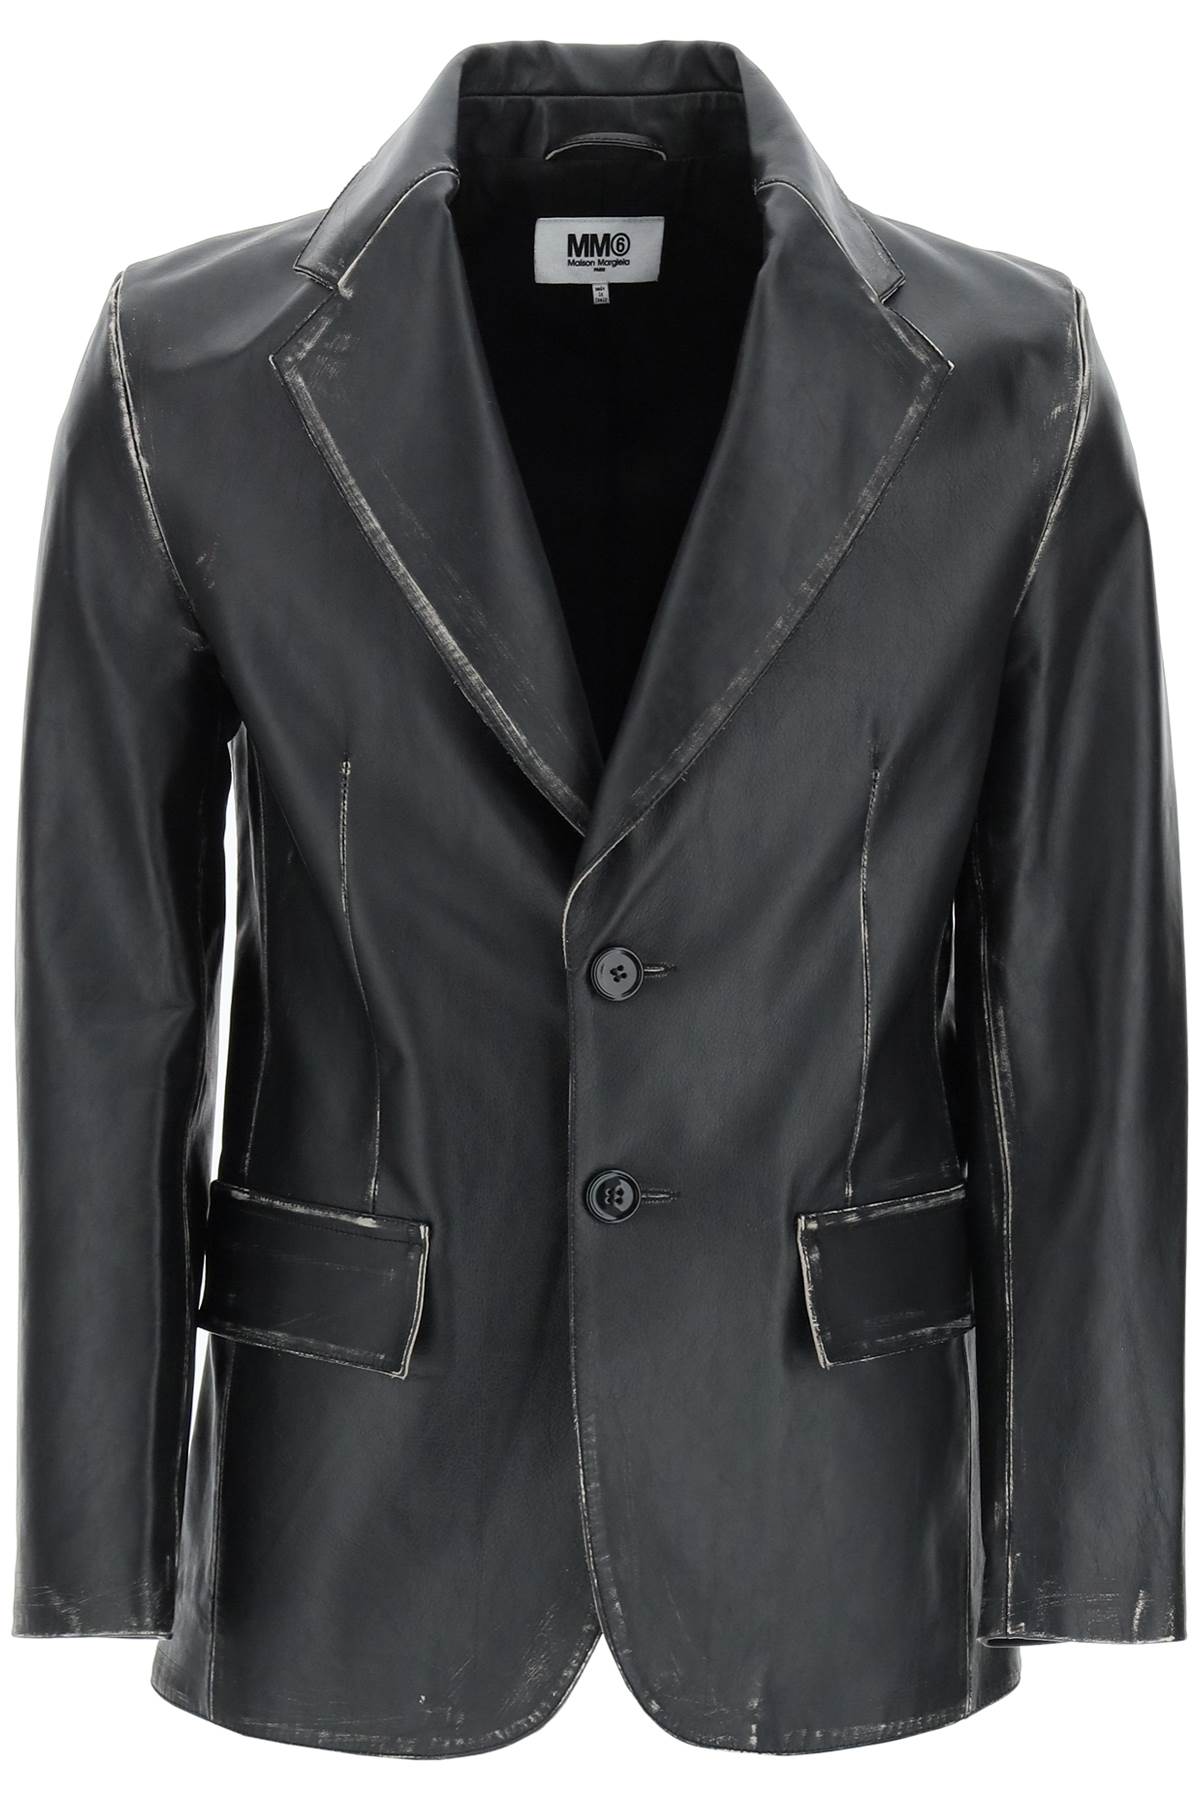 MM6 Maison Margiela Worn-out Effect Leather Jacket